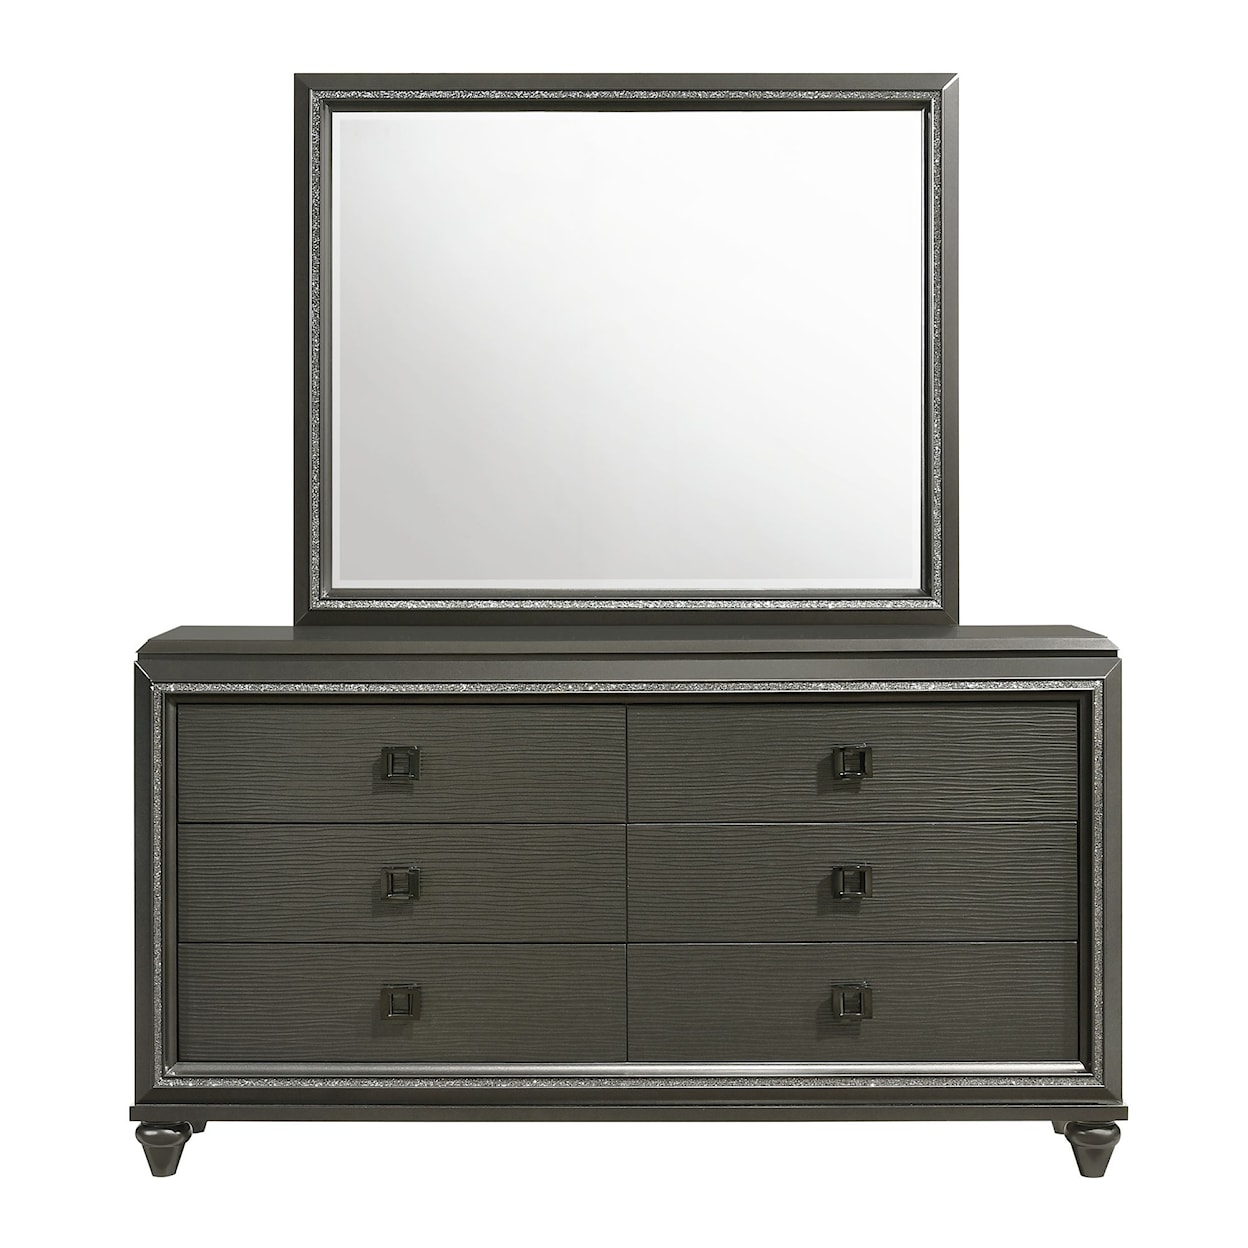 Elements International Moonstone Dresser and Mirror